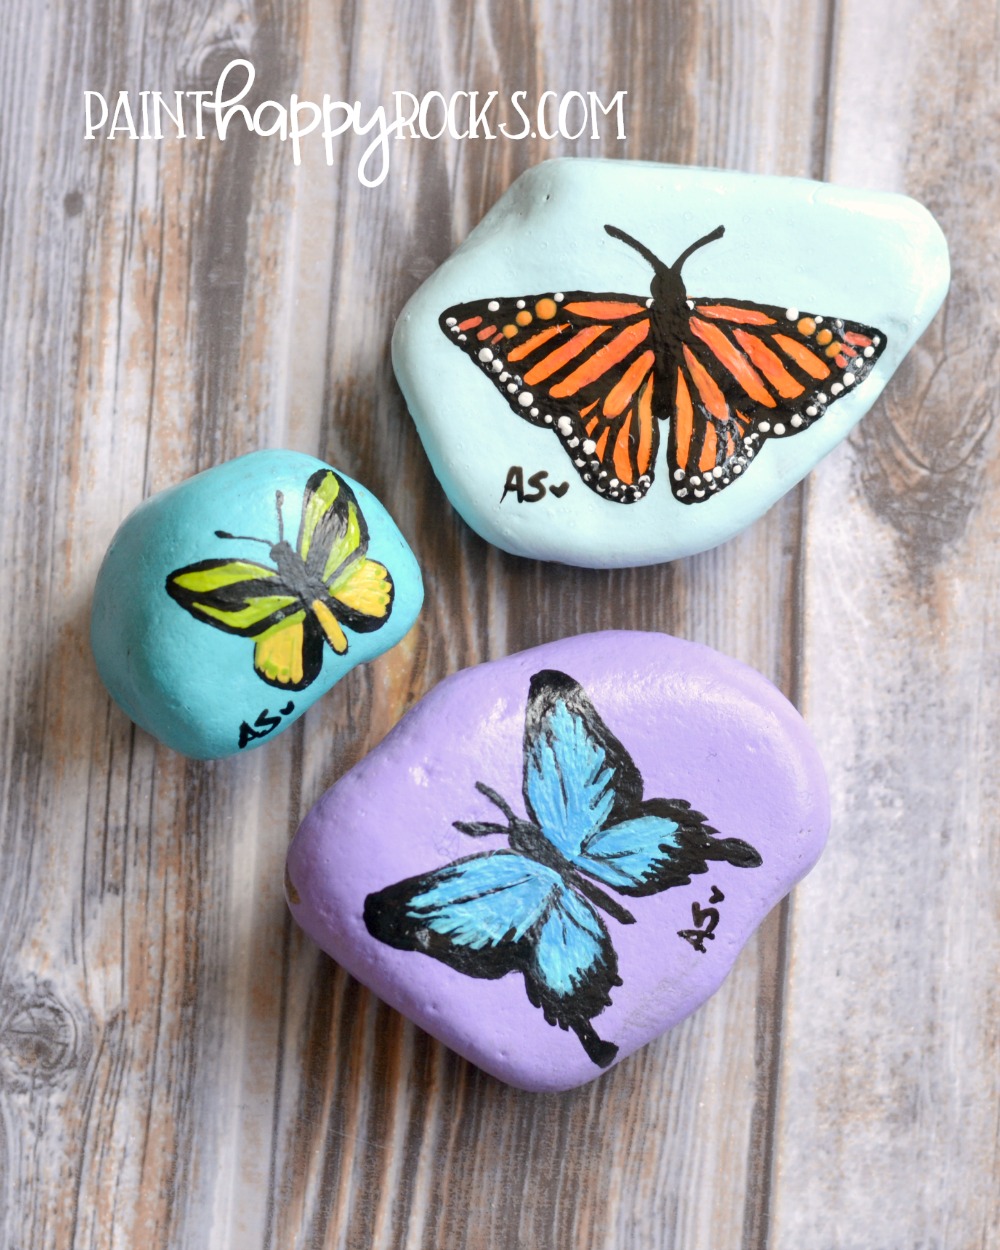 Rock Painting Ideas | Butterflies at painthappyrocks.com #PaintHappy Rocks #Painted Rocks #RockPainting